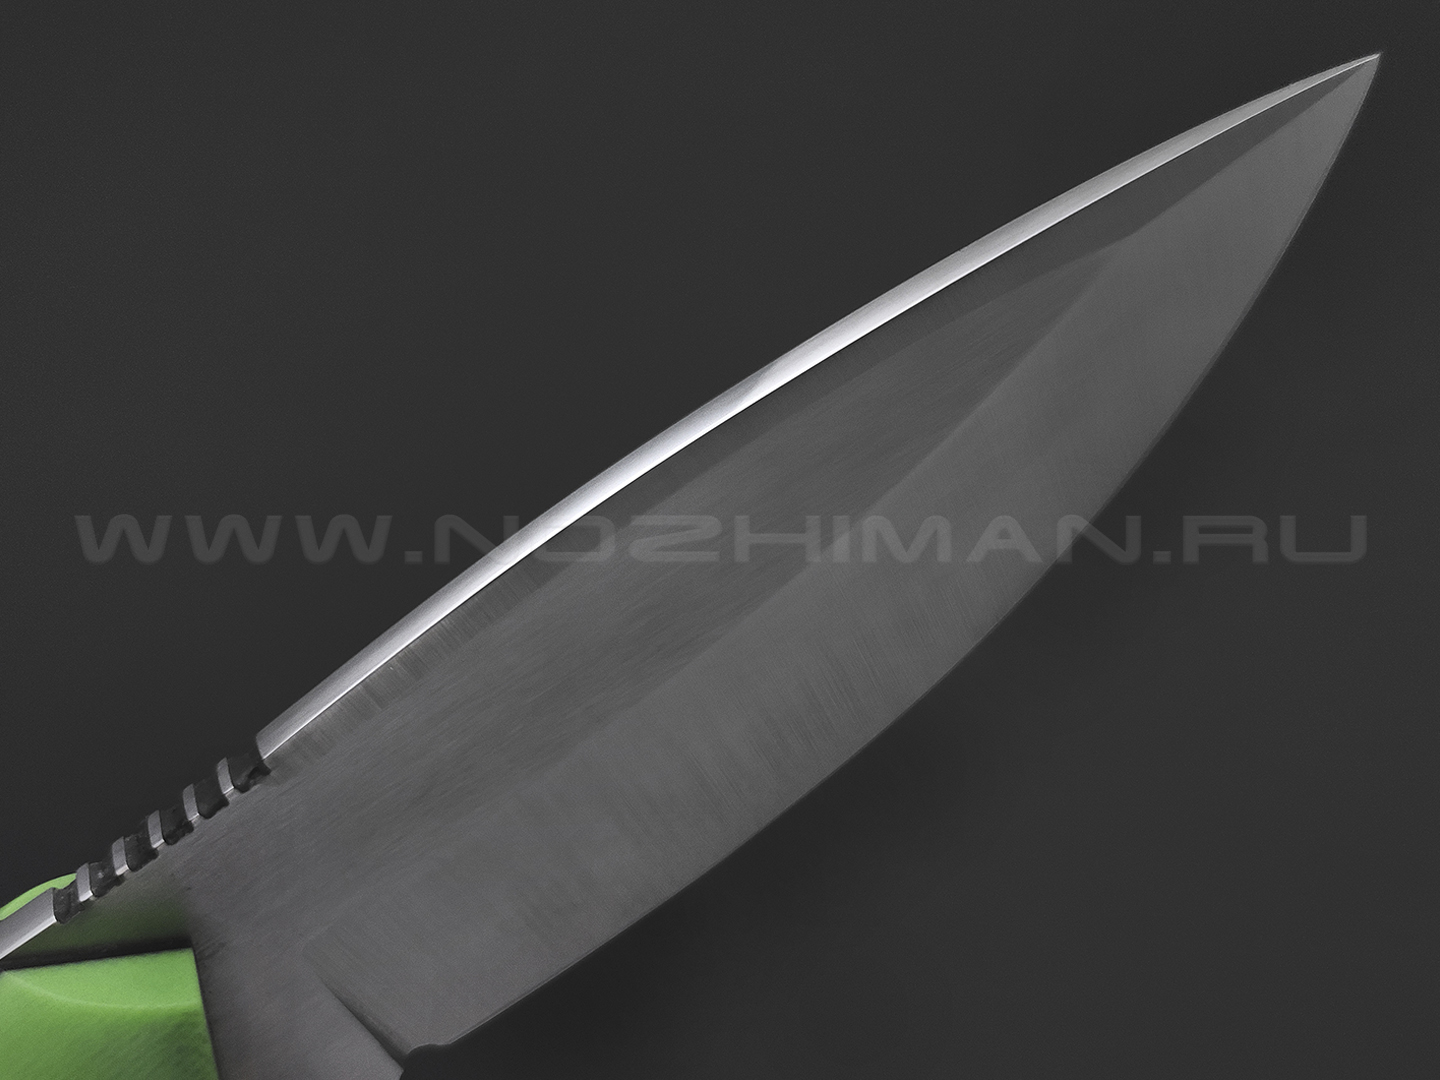 7 ножей нож Пиранья сталь N690 satin, рукоять G10 green & black